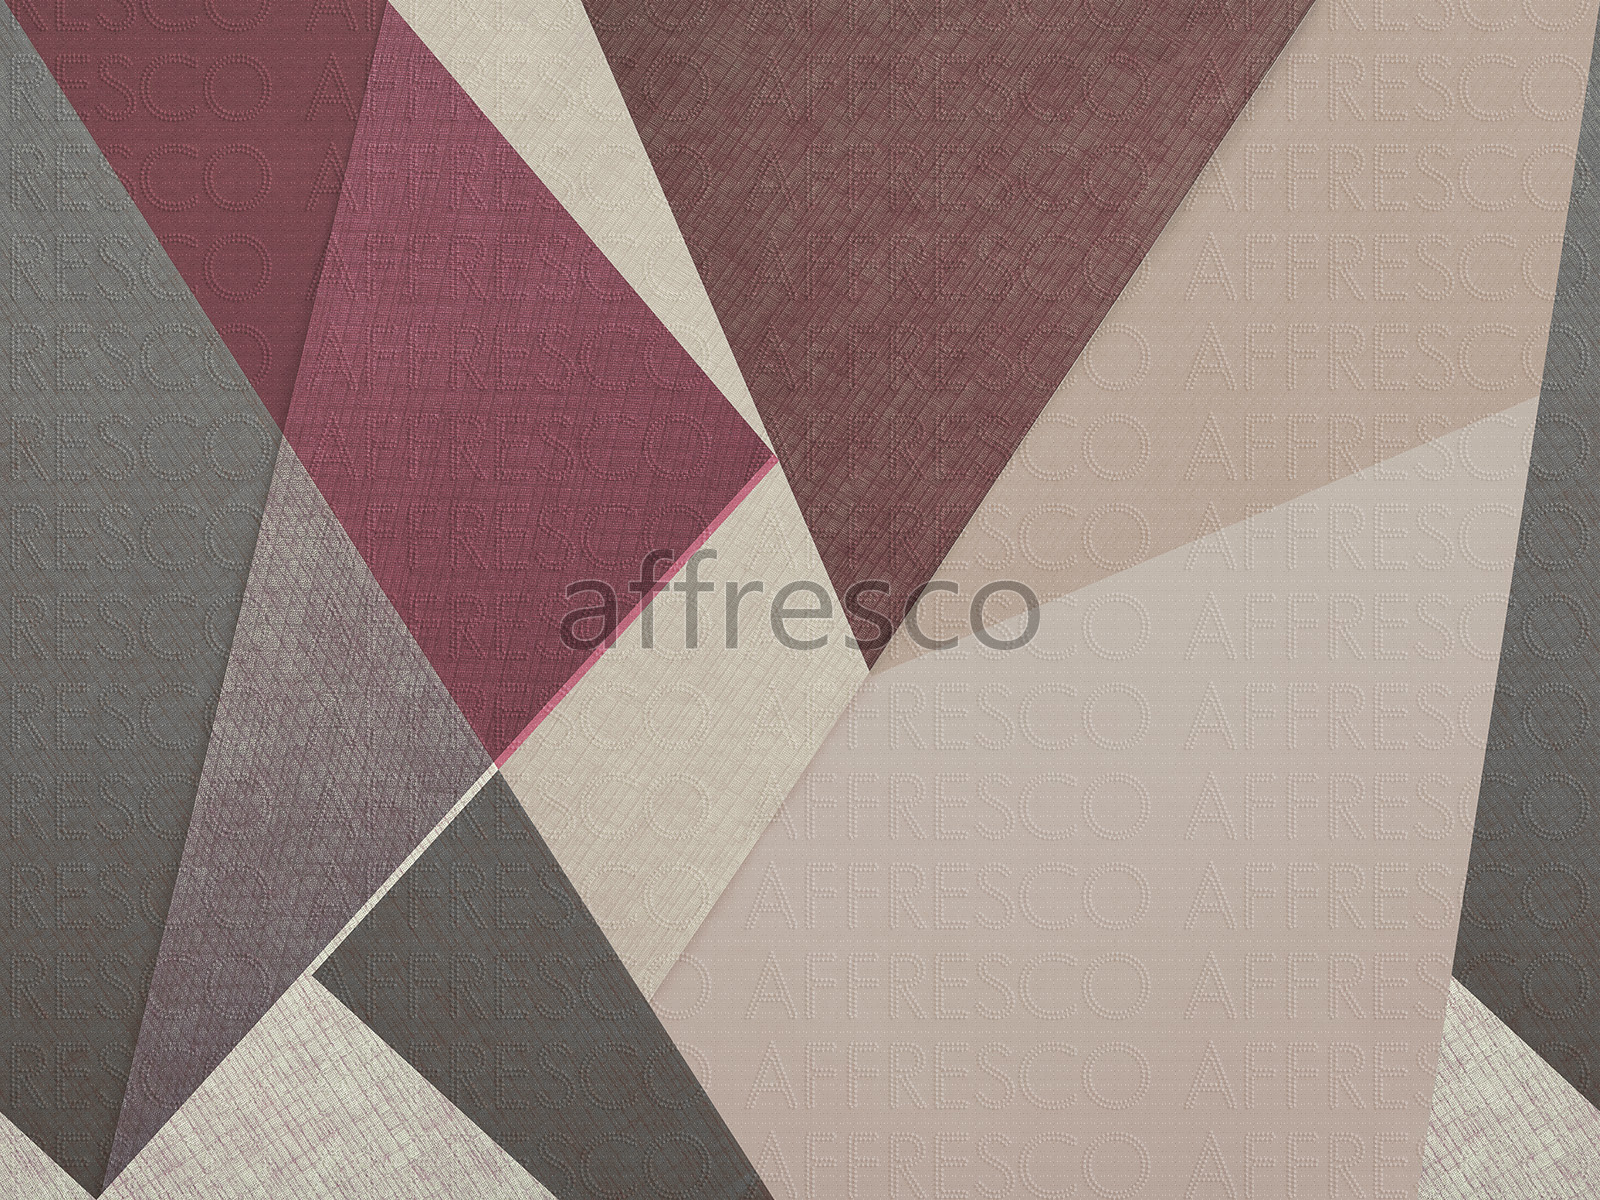 RE866-COL2 | Fine Art | Affresco Factory